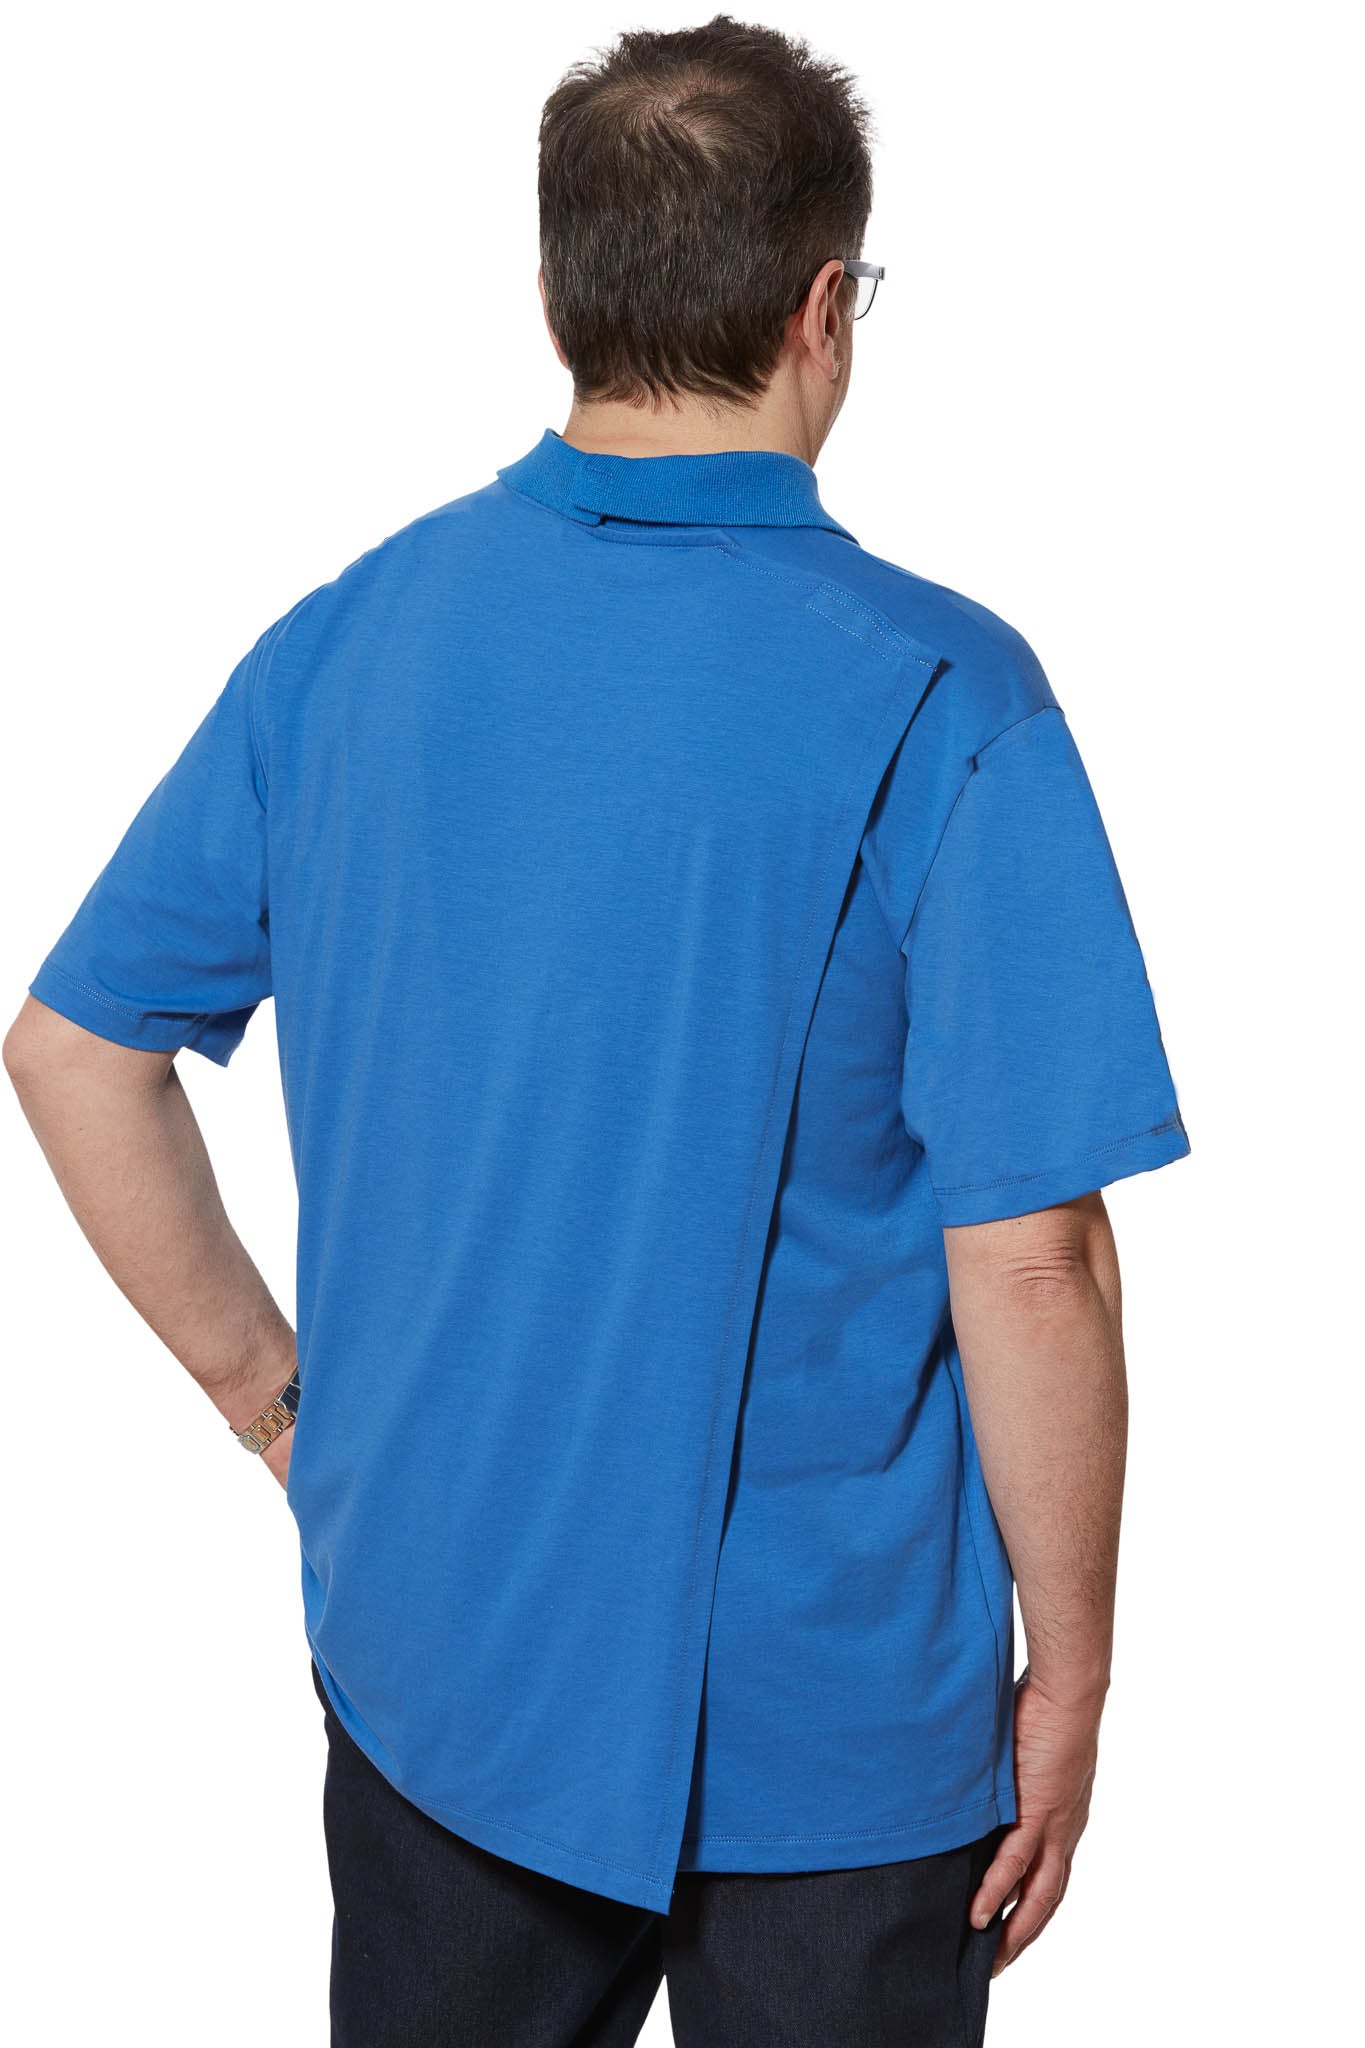 Polo Shirt for Men - Blue | Ralfie | Adaptive Clothing by Ovidis